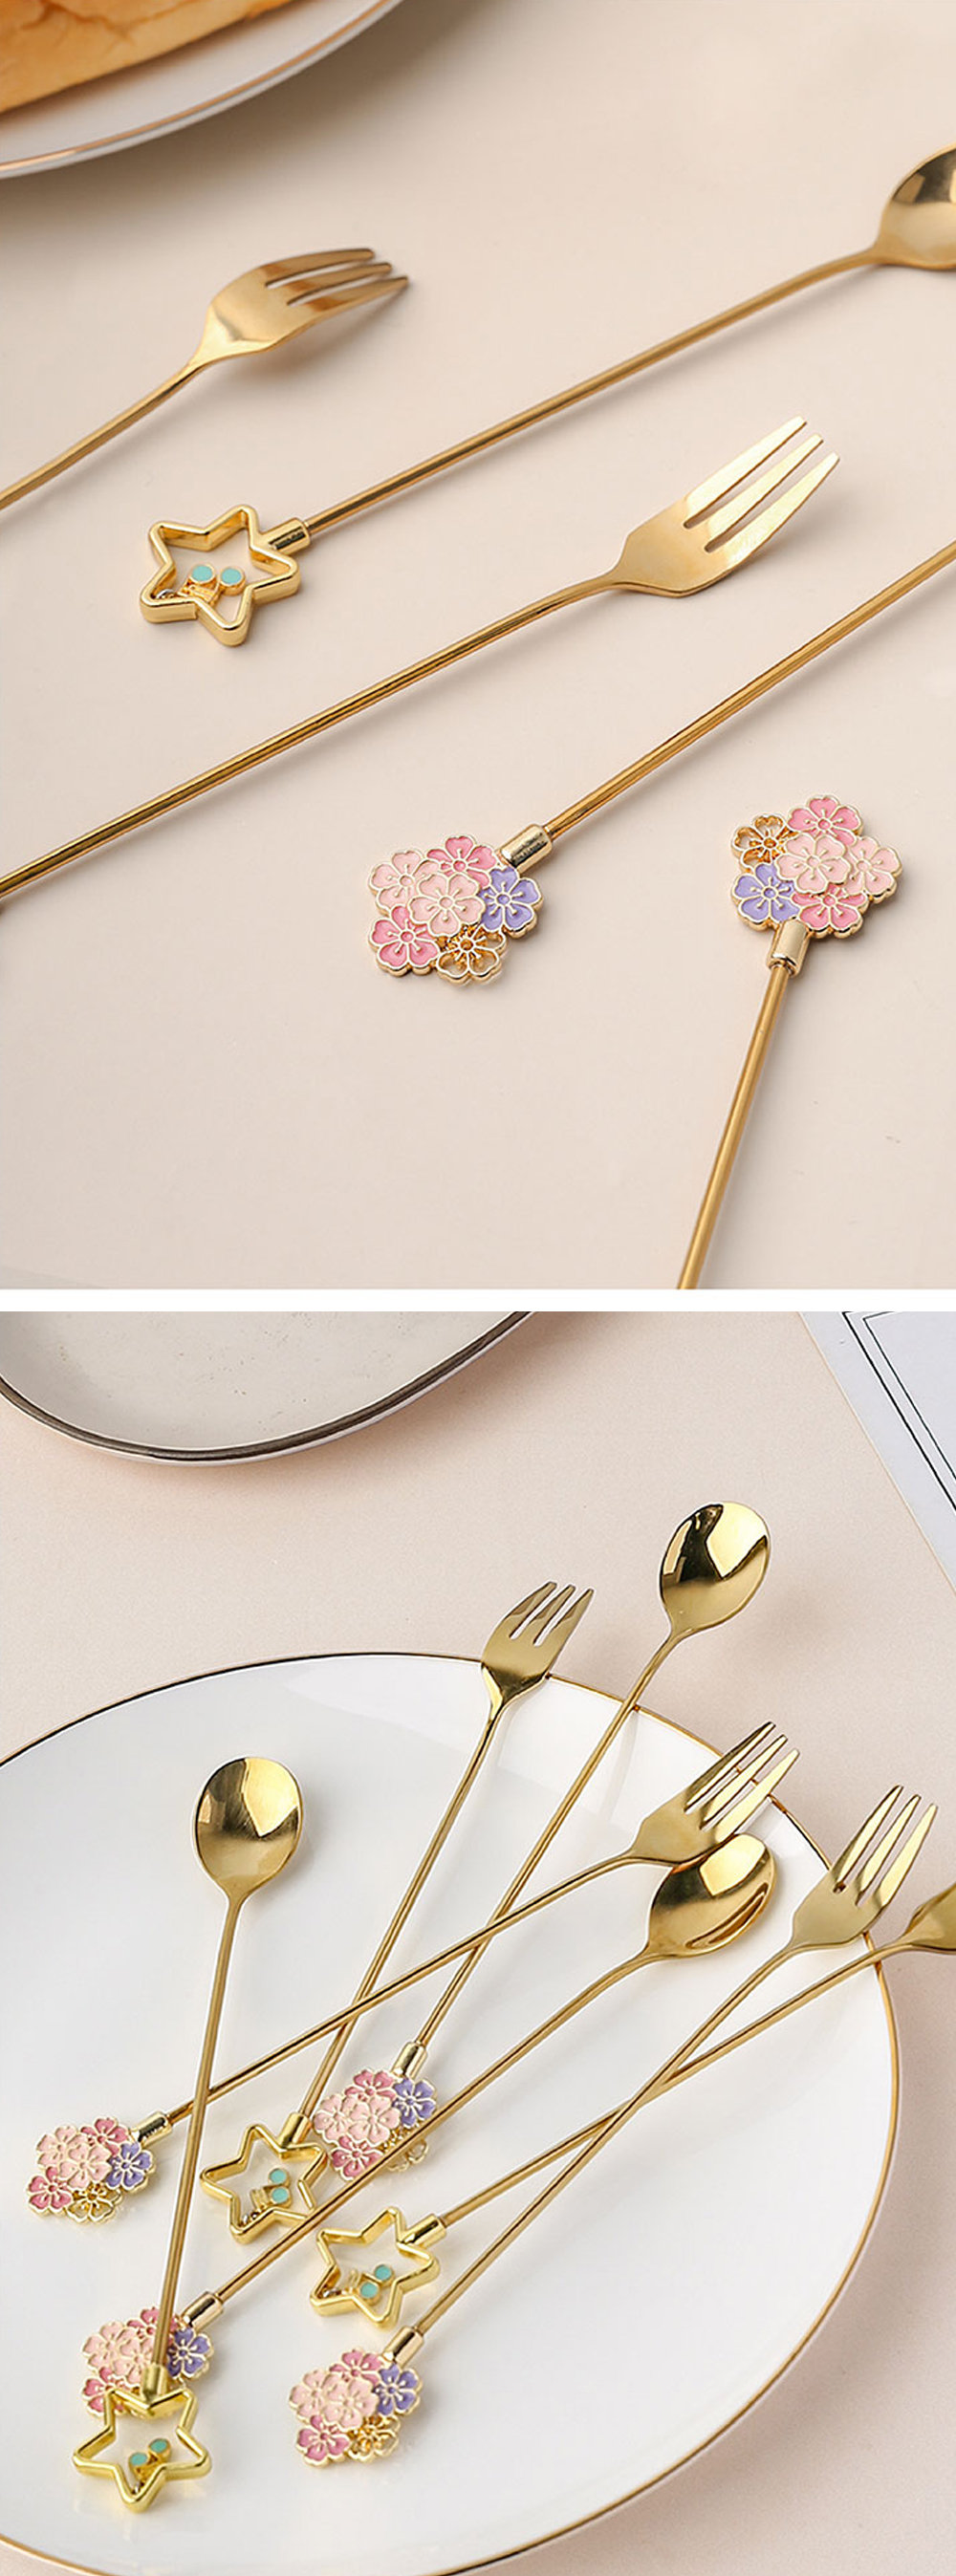 Elegant Decorative Spoons And Forks - ApolloBox